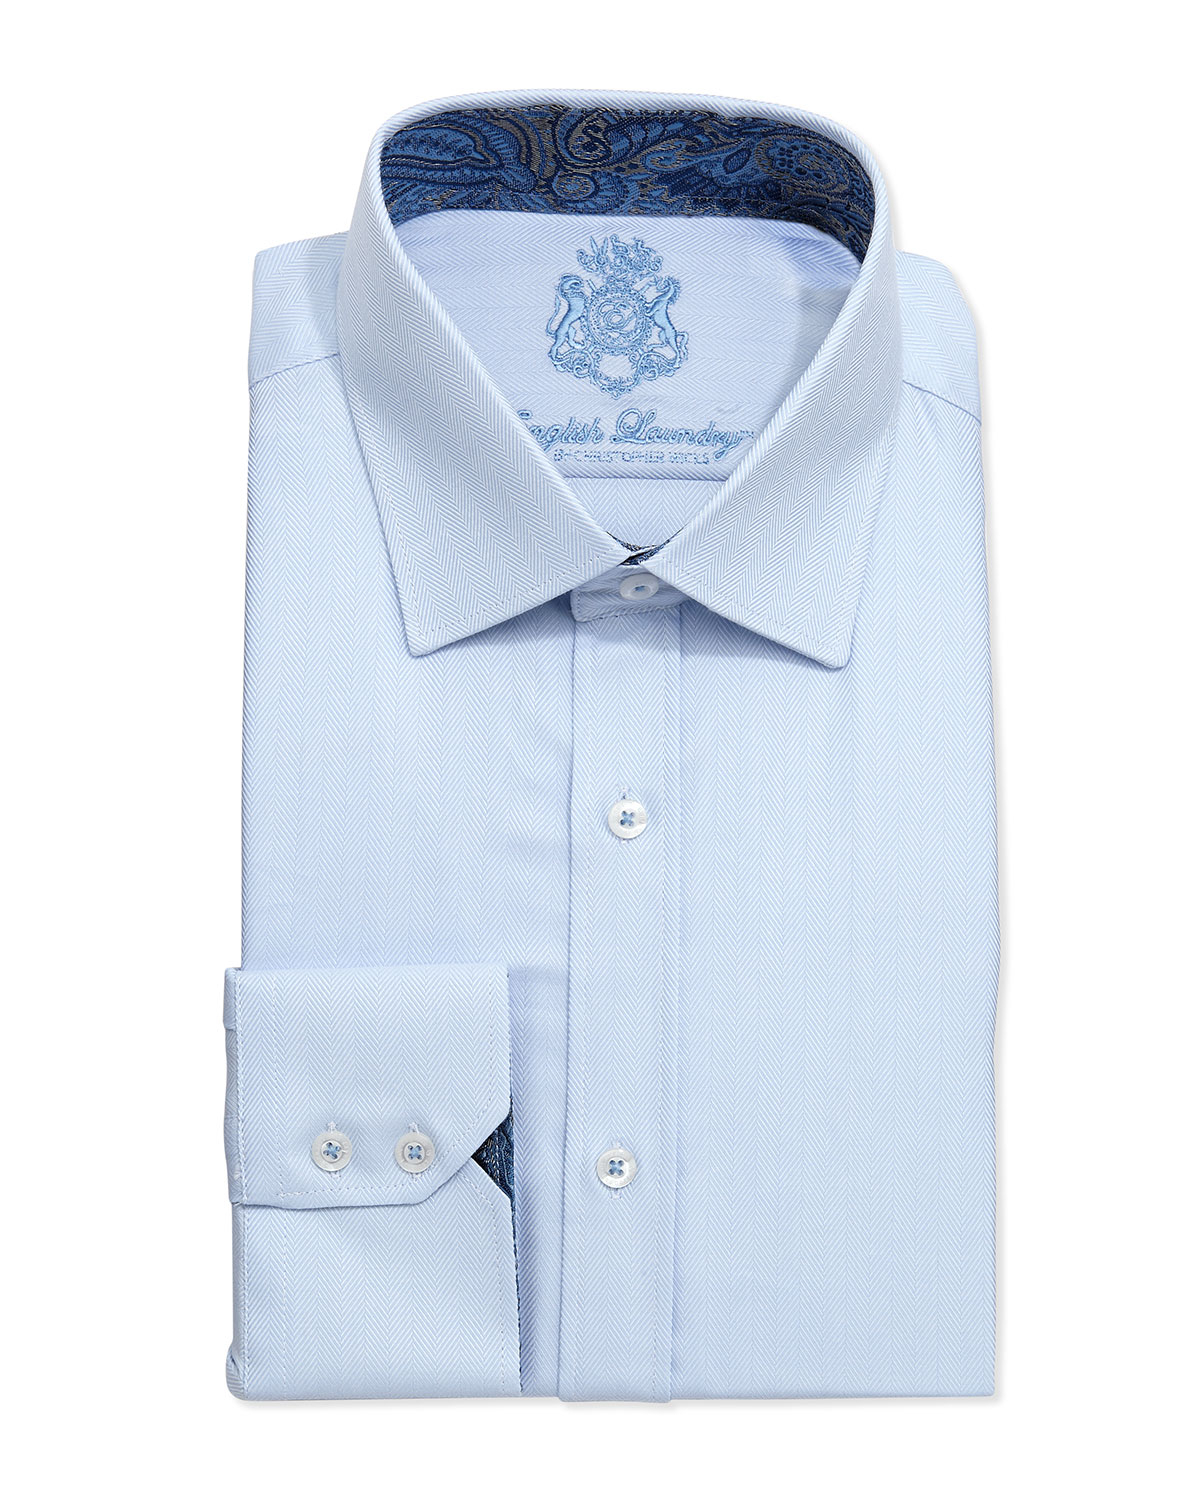 Lyst - English Laundry Long-sleeve Herr Dress Shirt in Blue for Men